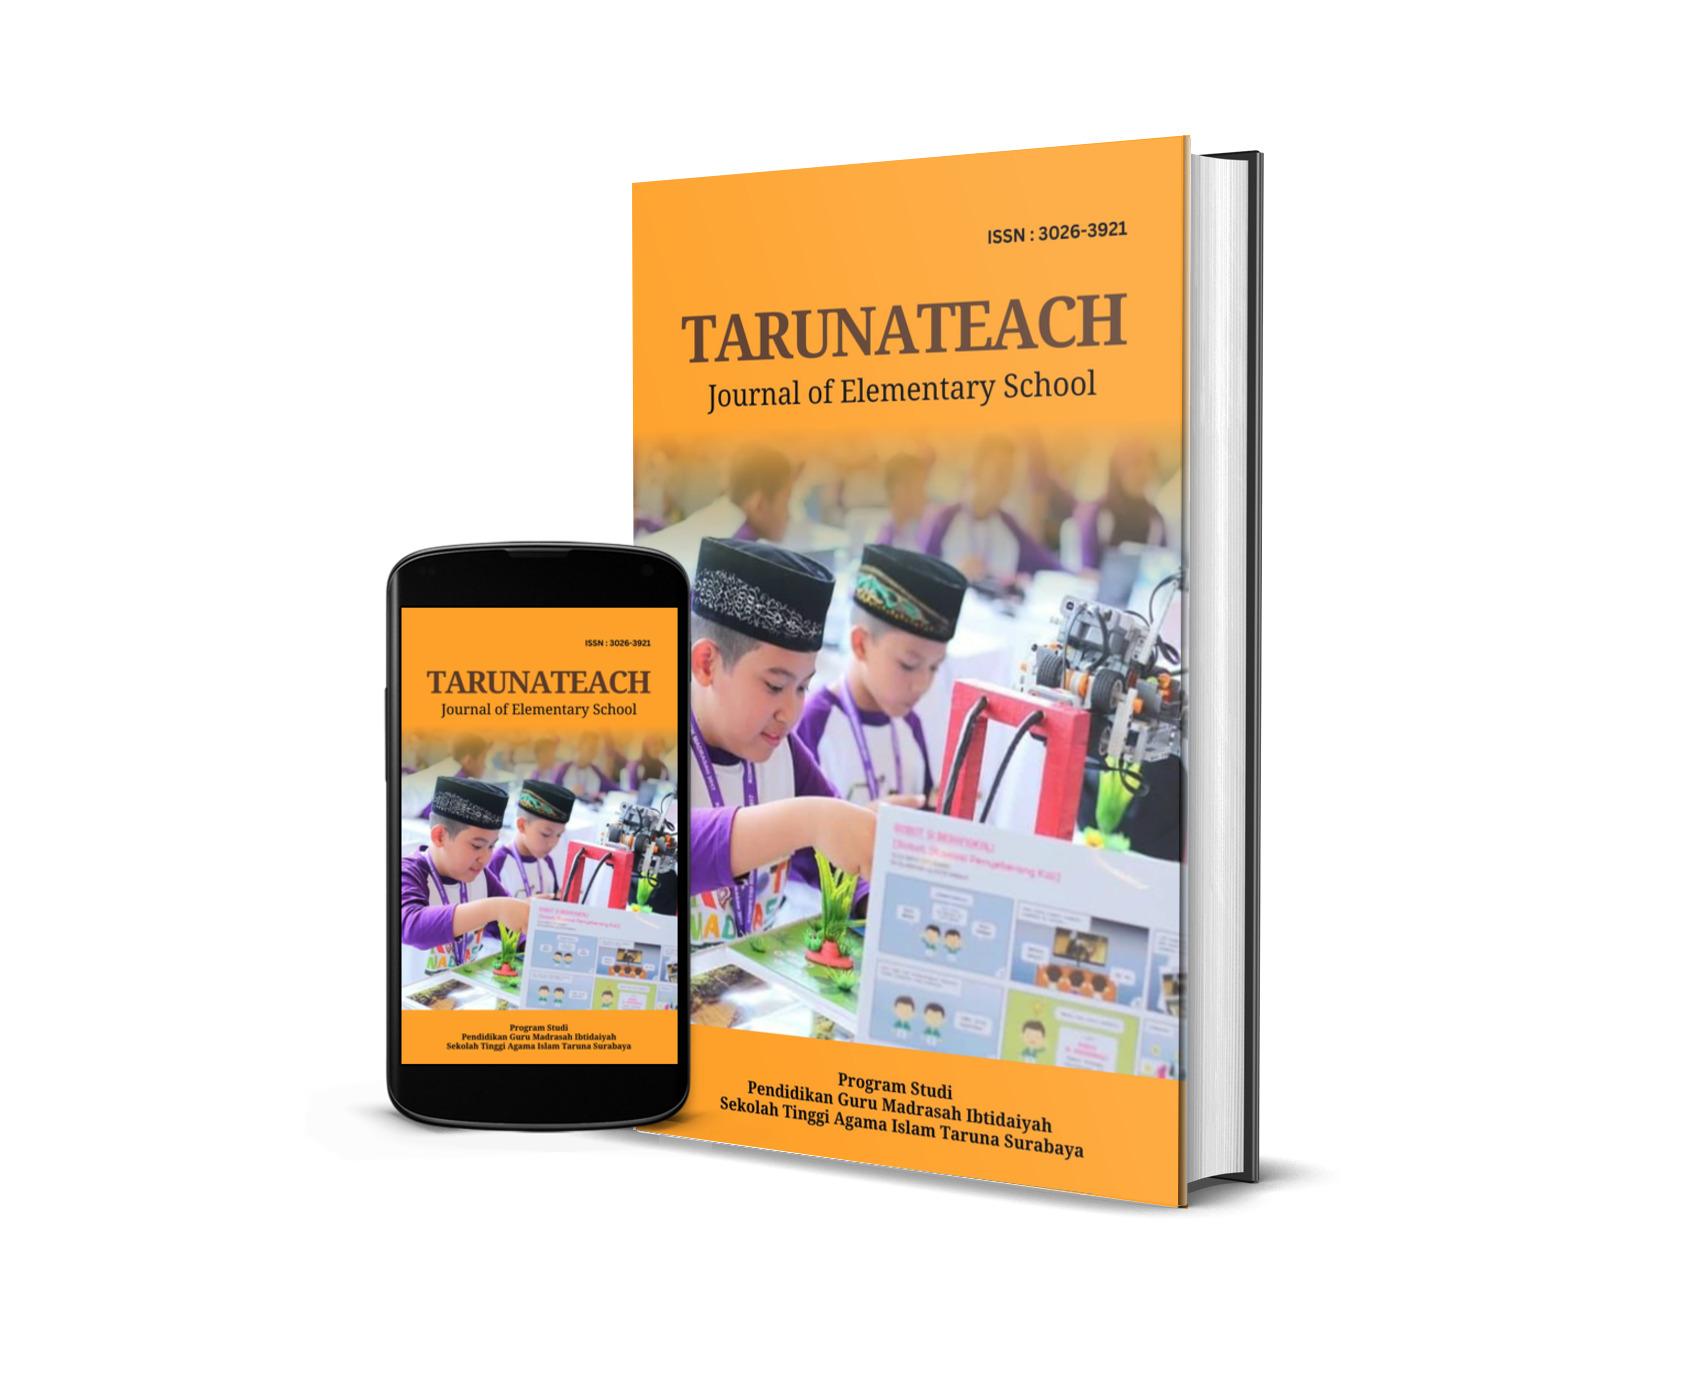 TARUNATEACH: Journal of Elementary School